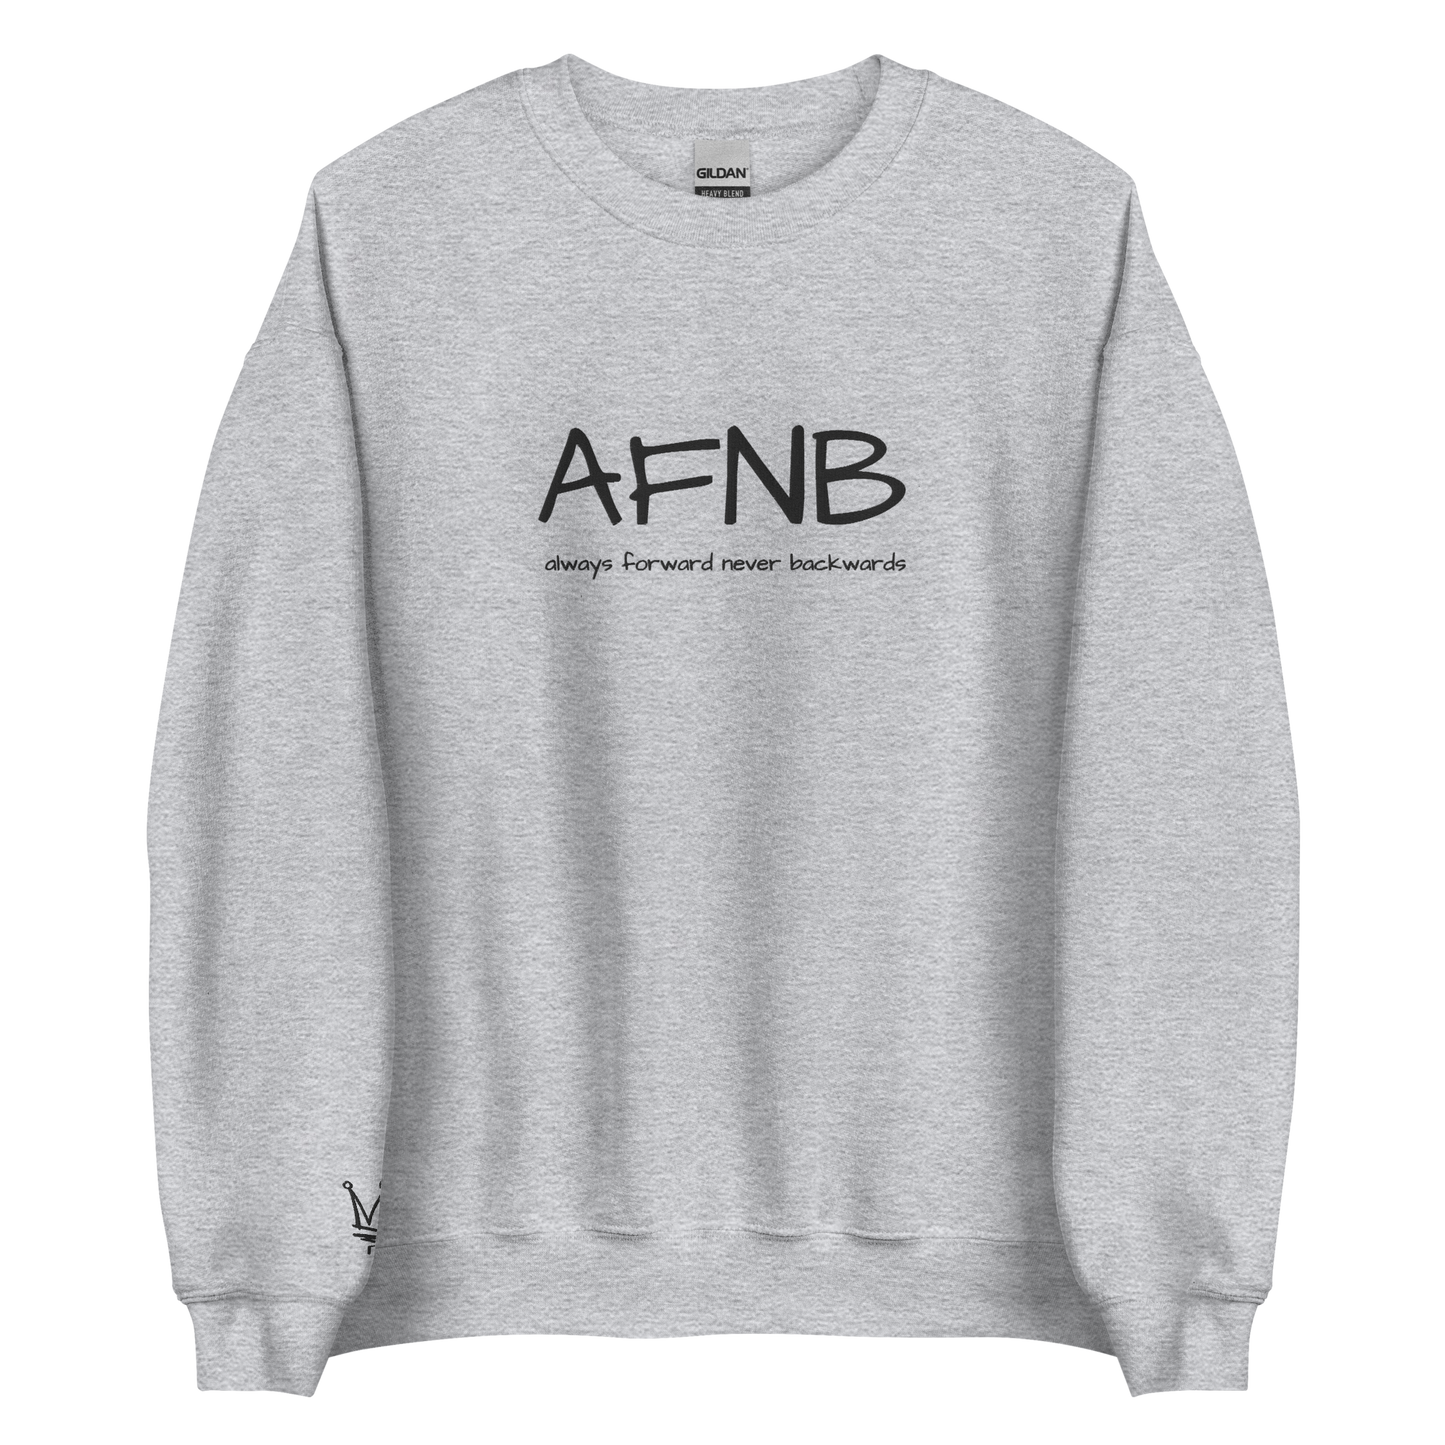 AFNB Embroidered Sweatshirt